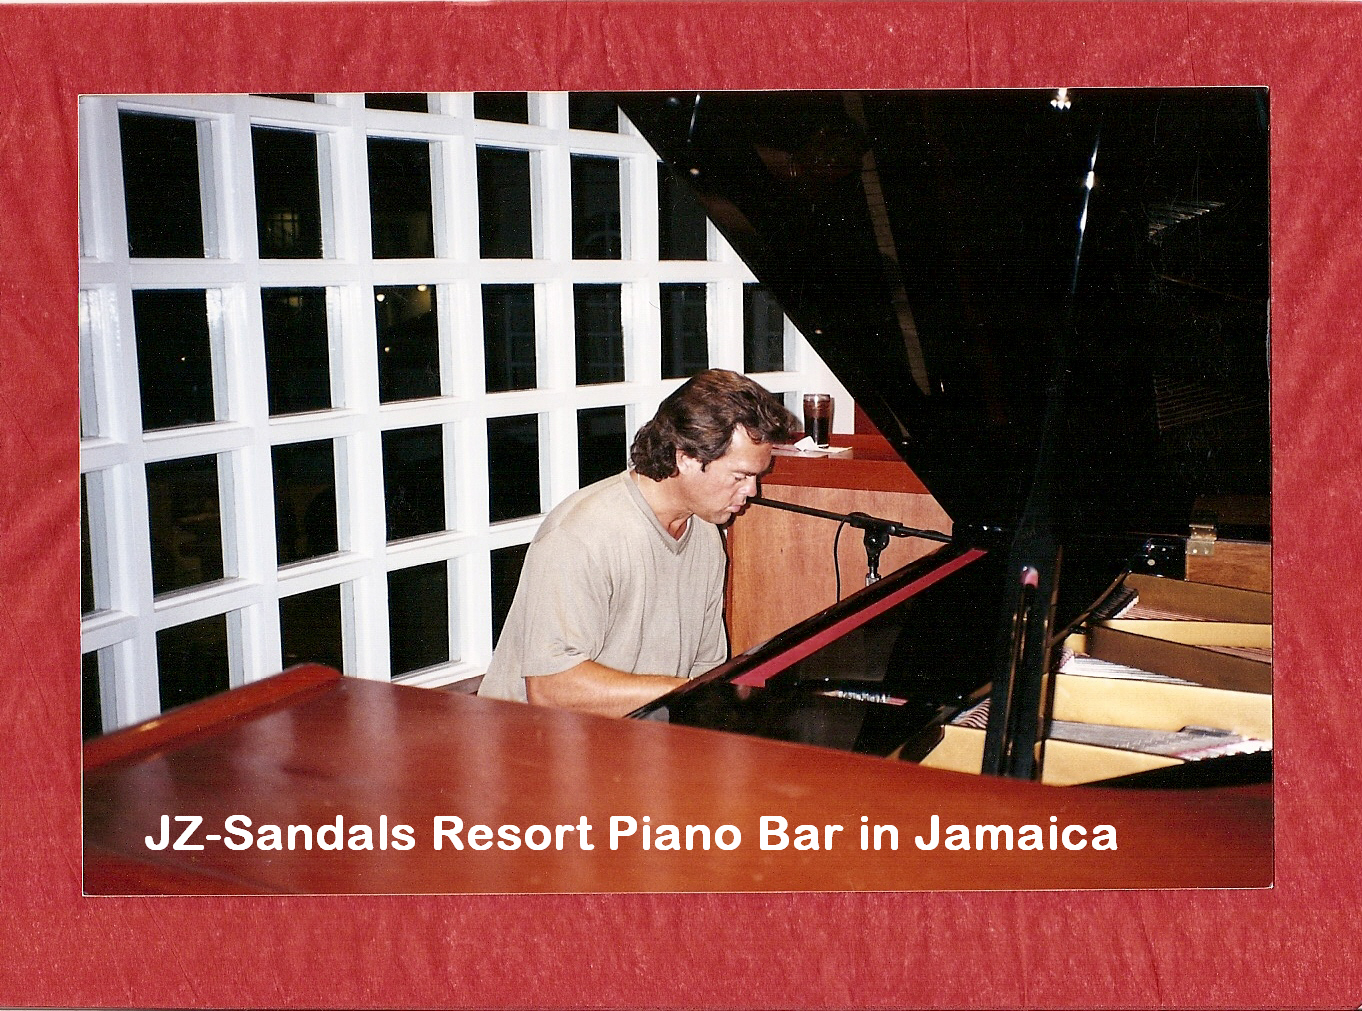 Performing in Jamaica